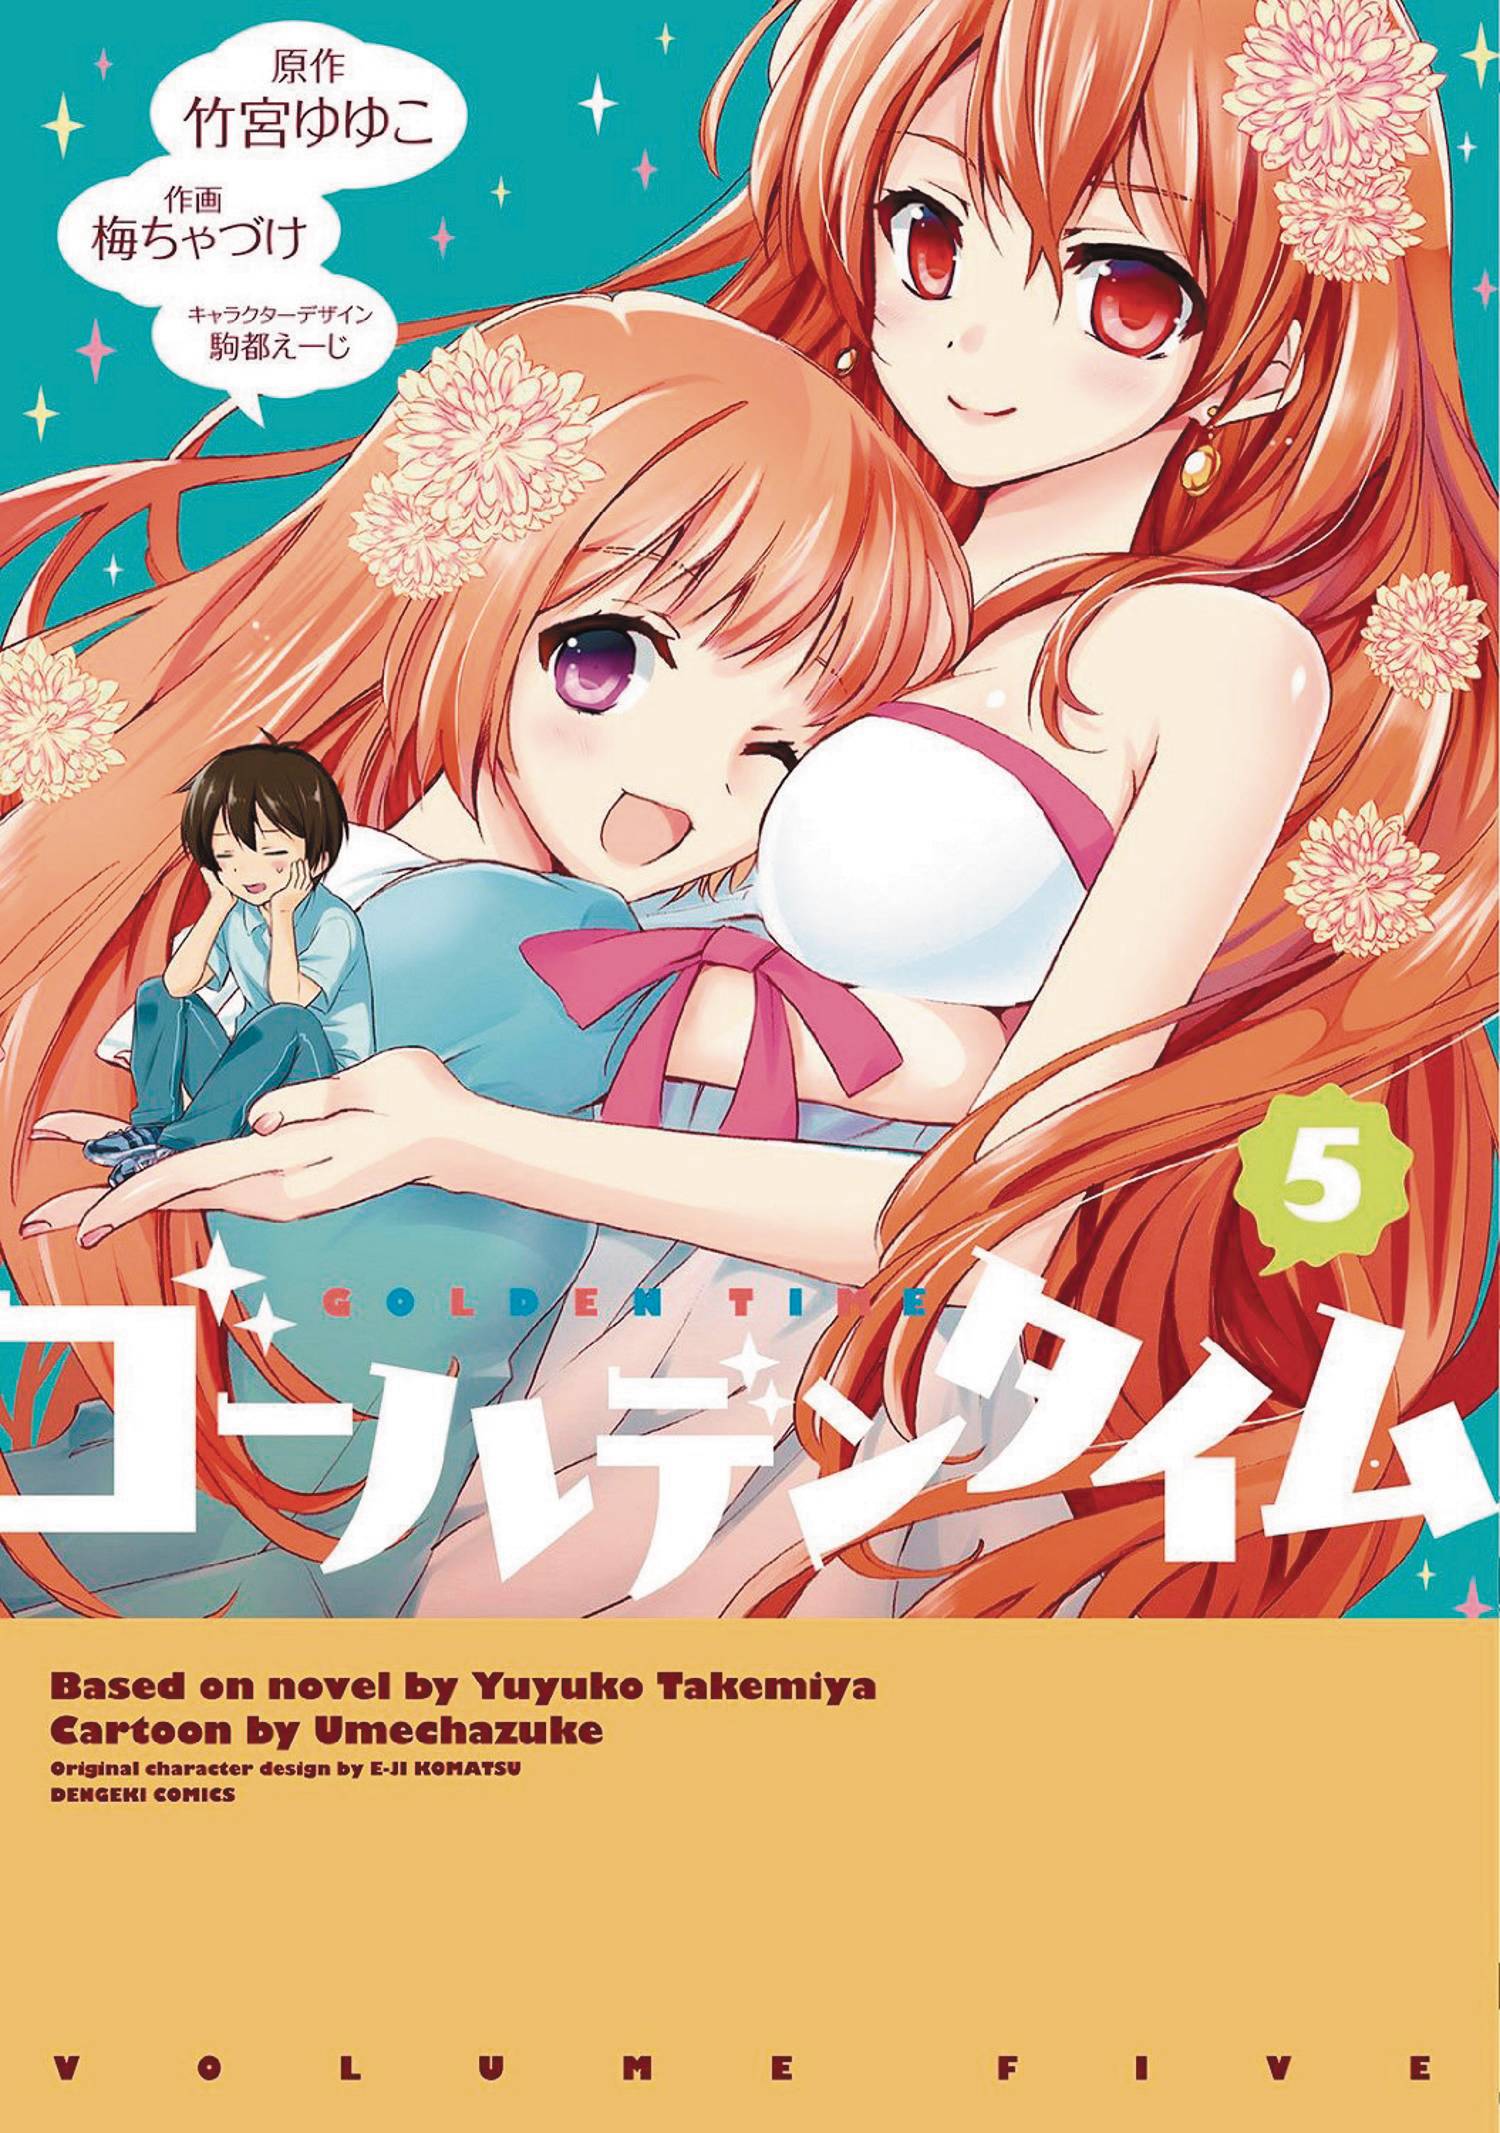 Former Tada Banri  Golden time, Anime, Anime romance